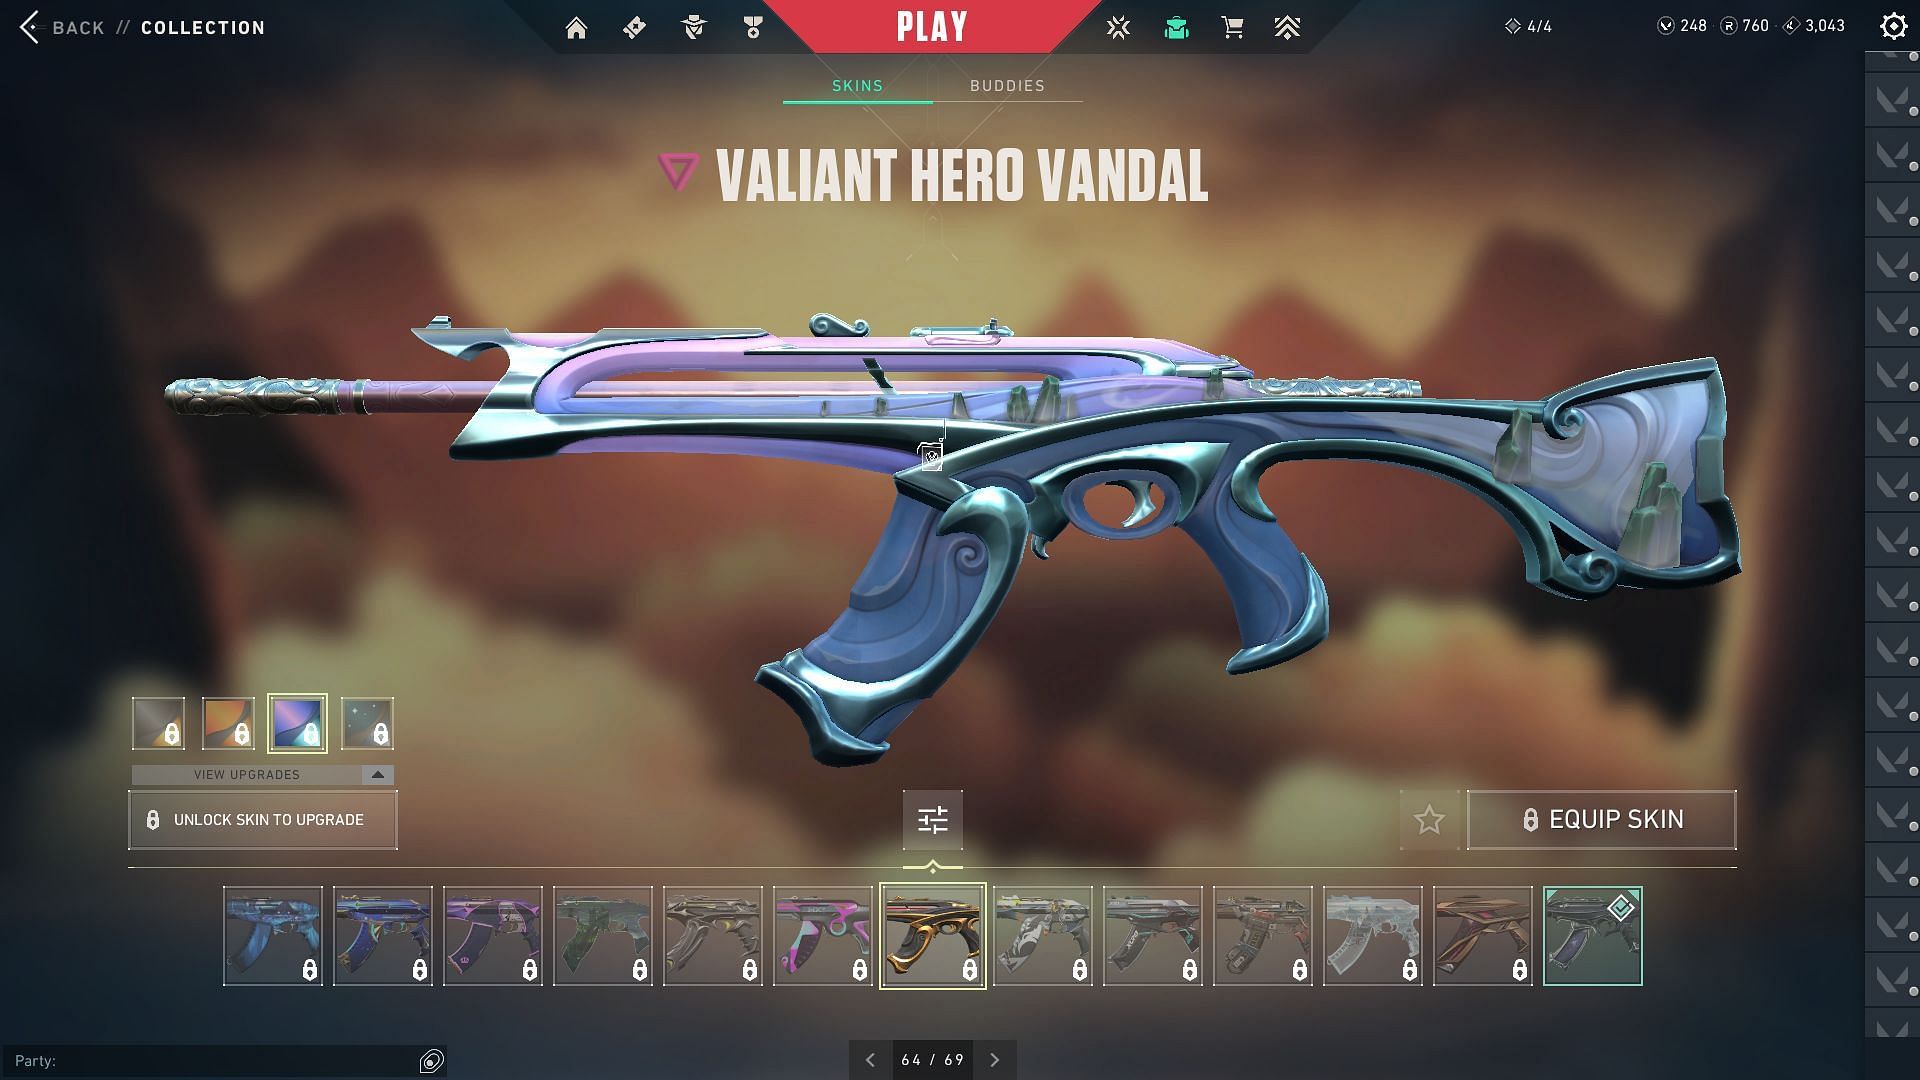 Valiant Hero Vandal (Image via Riot Games)